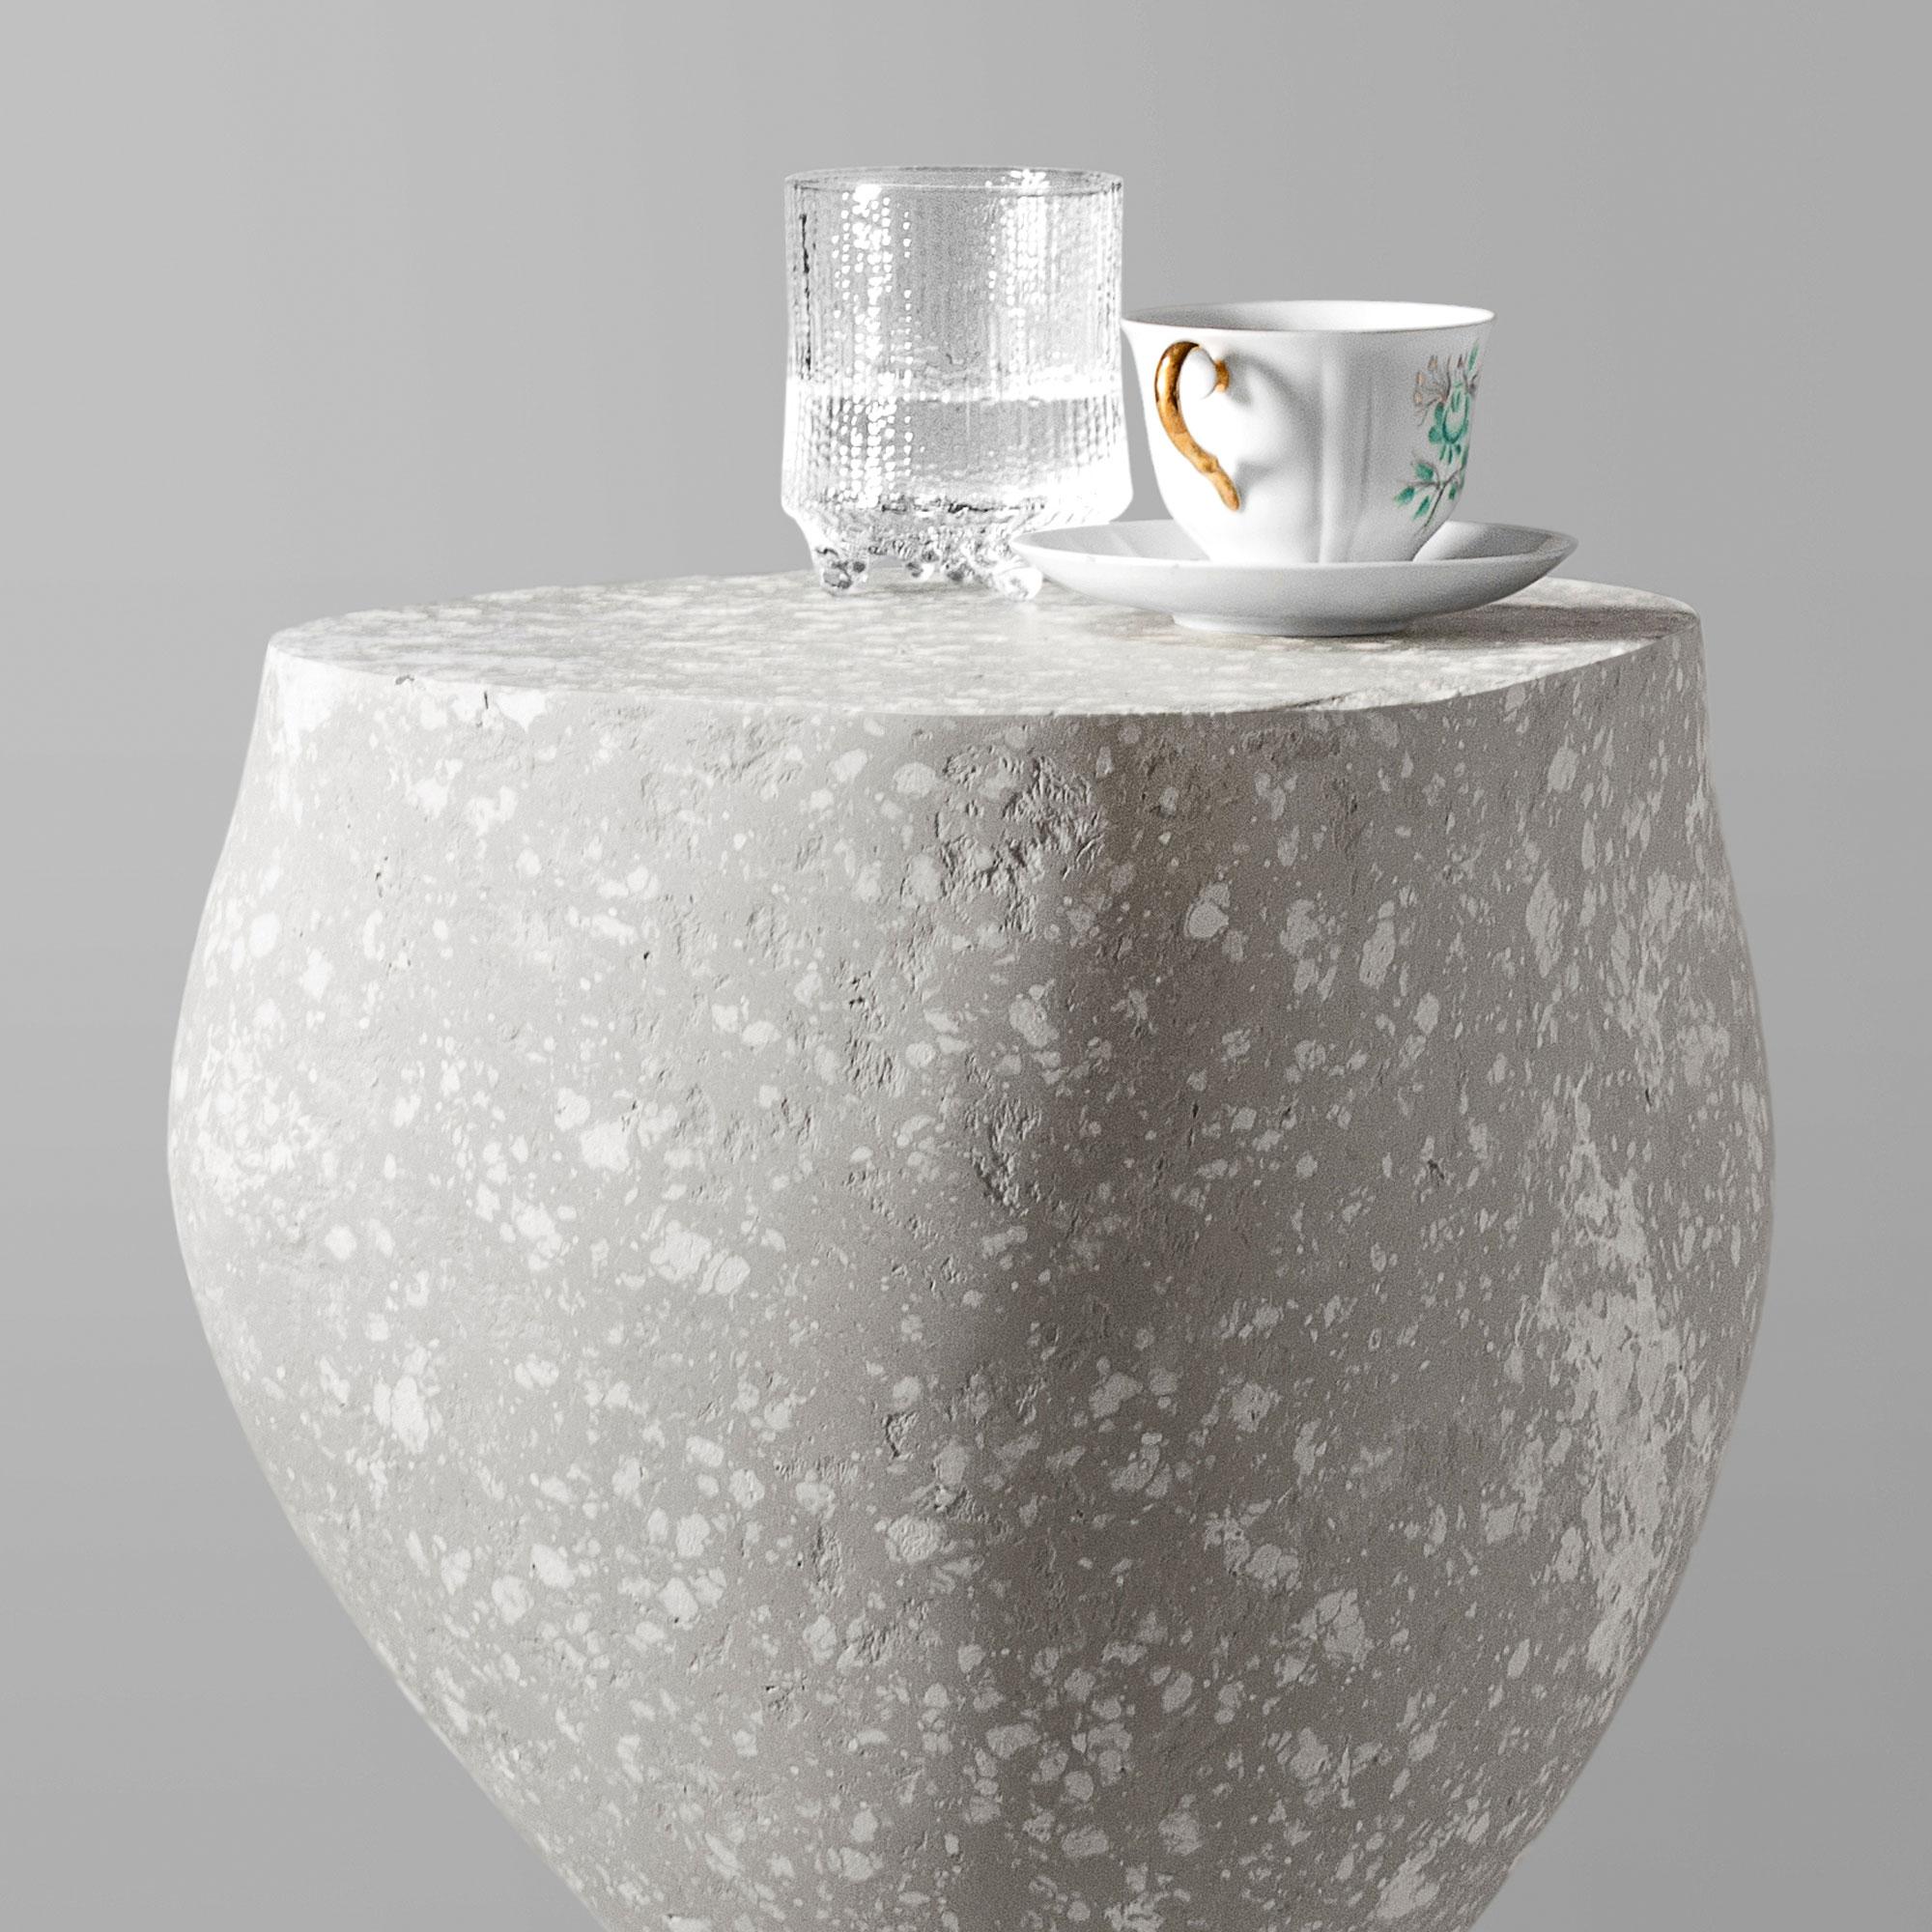 Moderne Table d'appoint moderne en béton, Light Gray Cement by Donatas Žukauskas En stock en vente